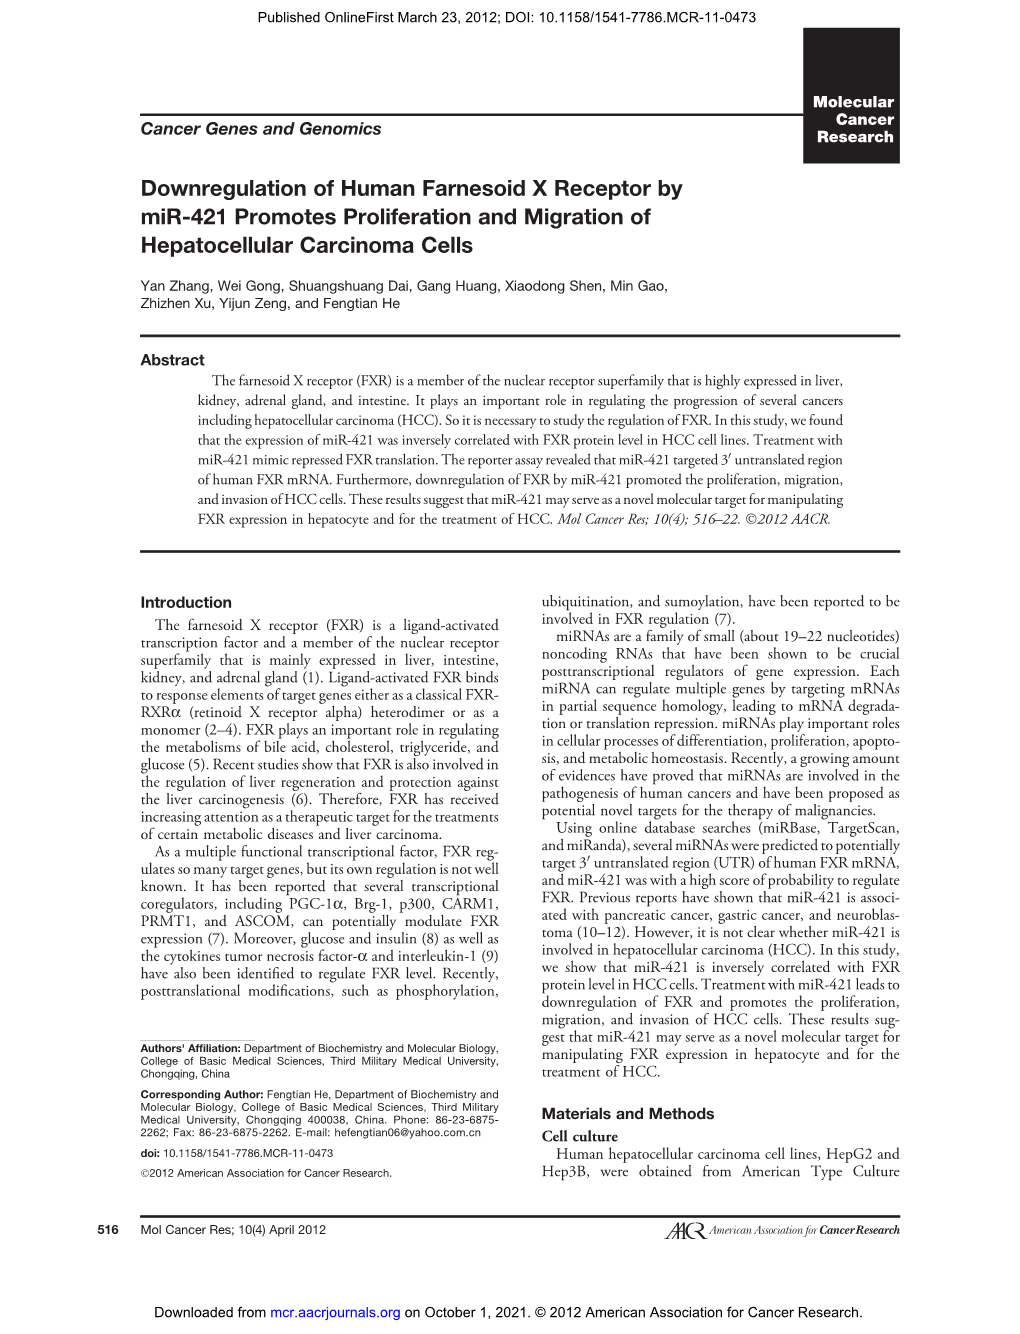 Downregulation of Human Farnesoid X Receptor by Mir-421 Promotes Proliferation and Migration of Hepatocellular Carcinoma Cells